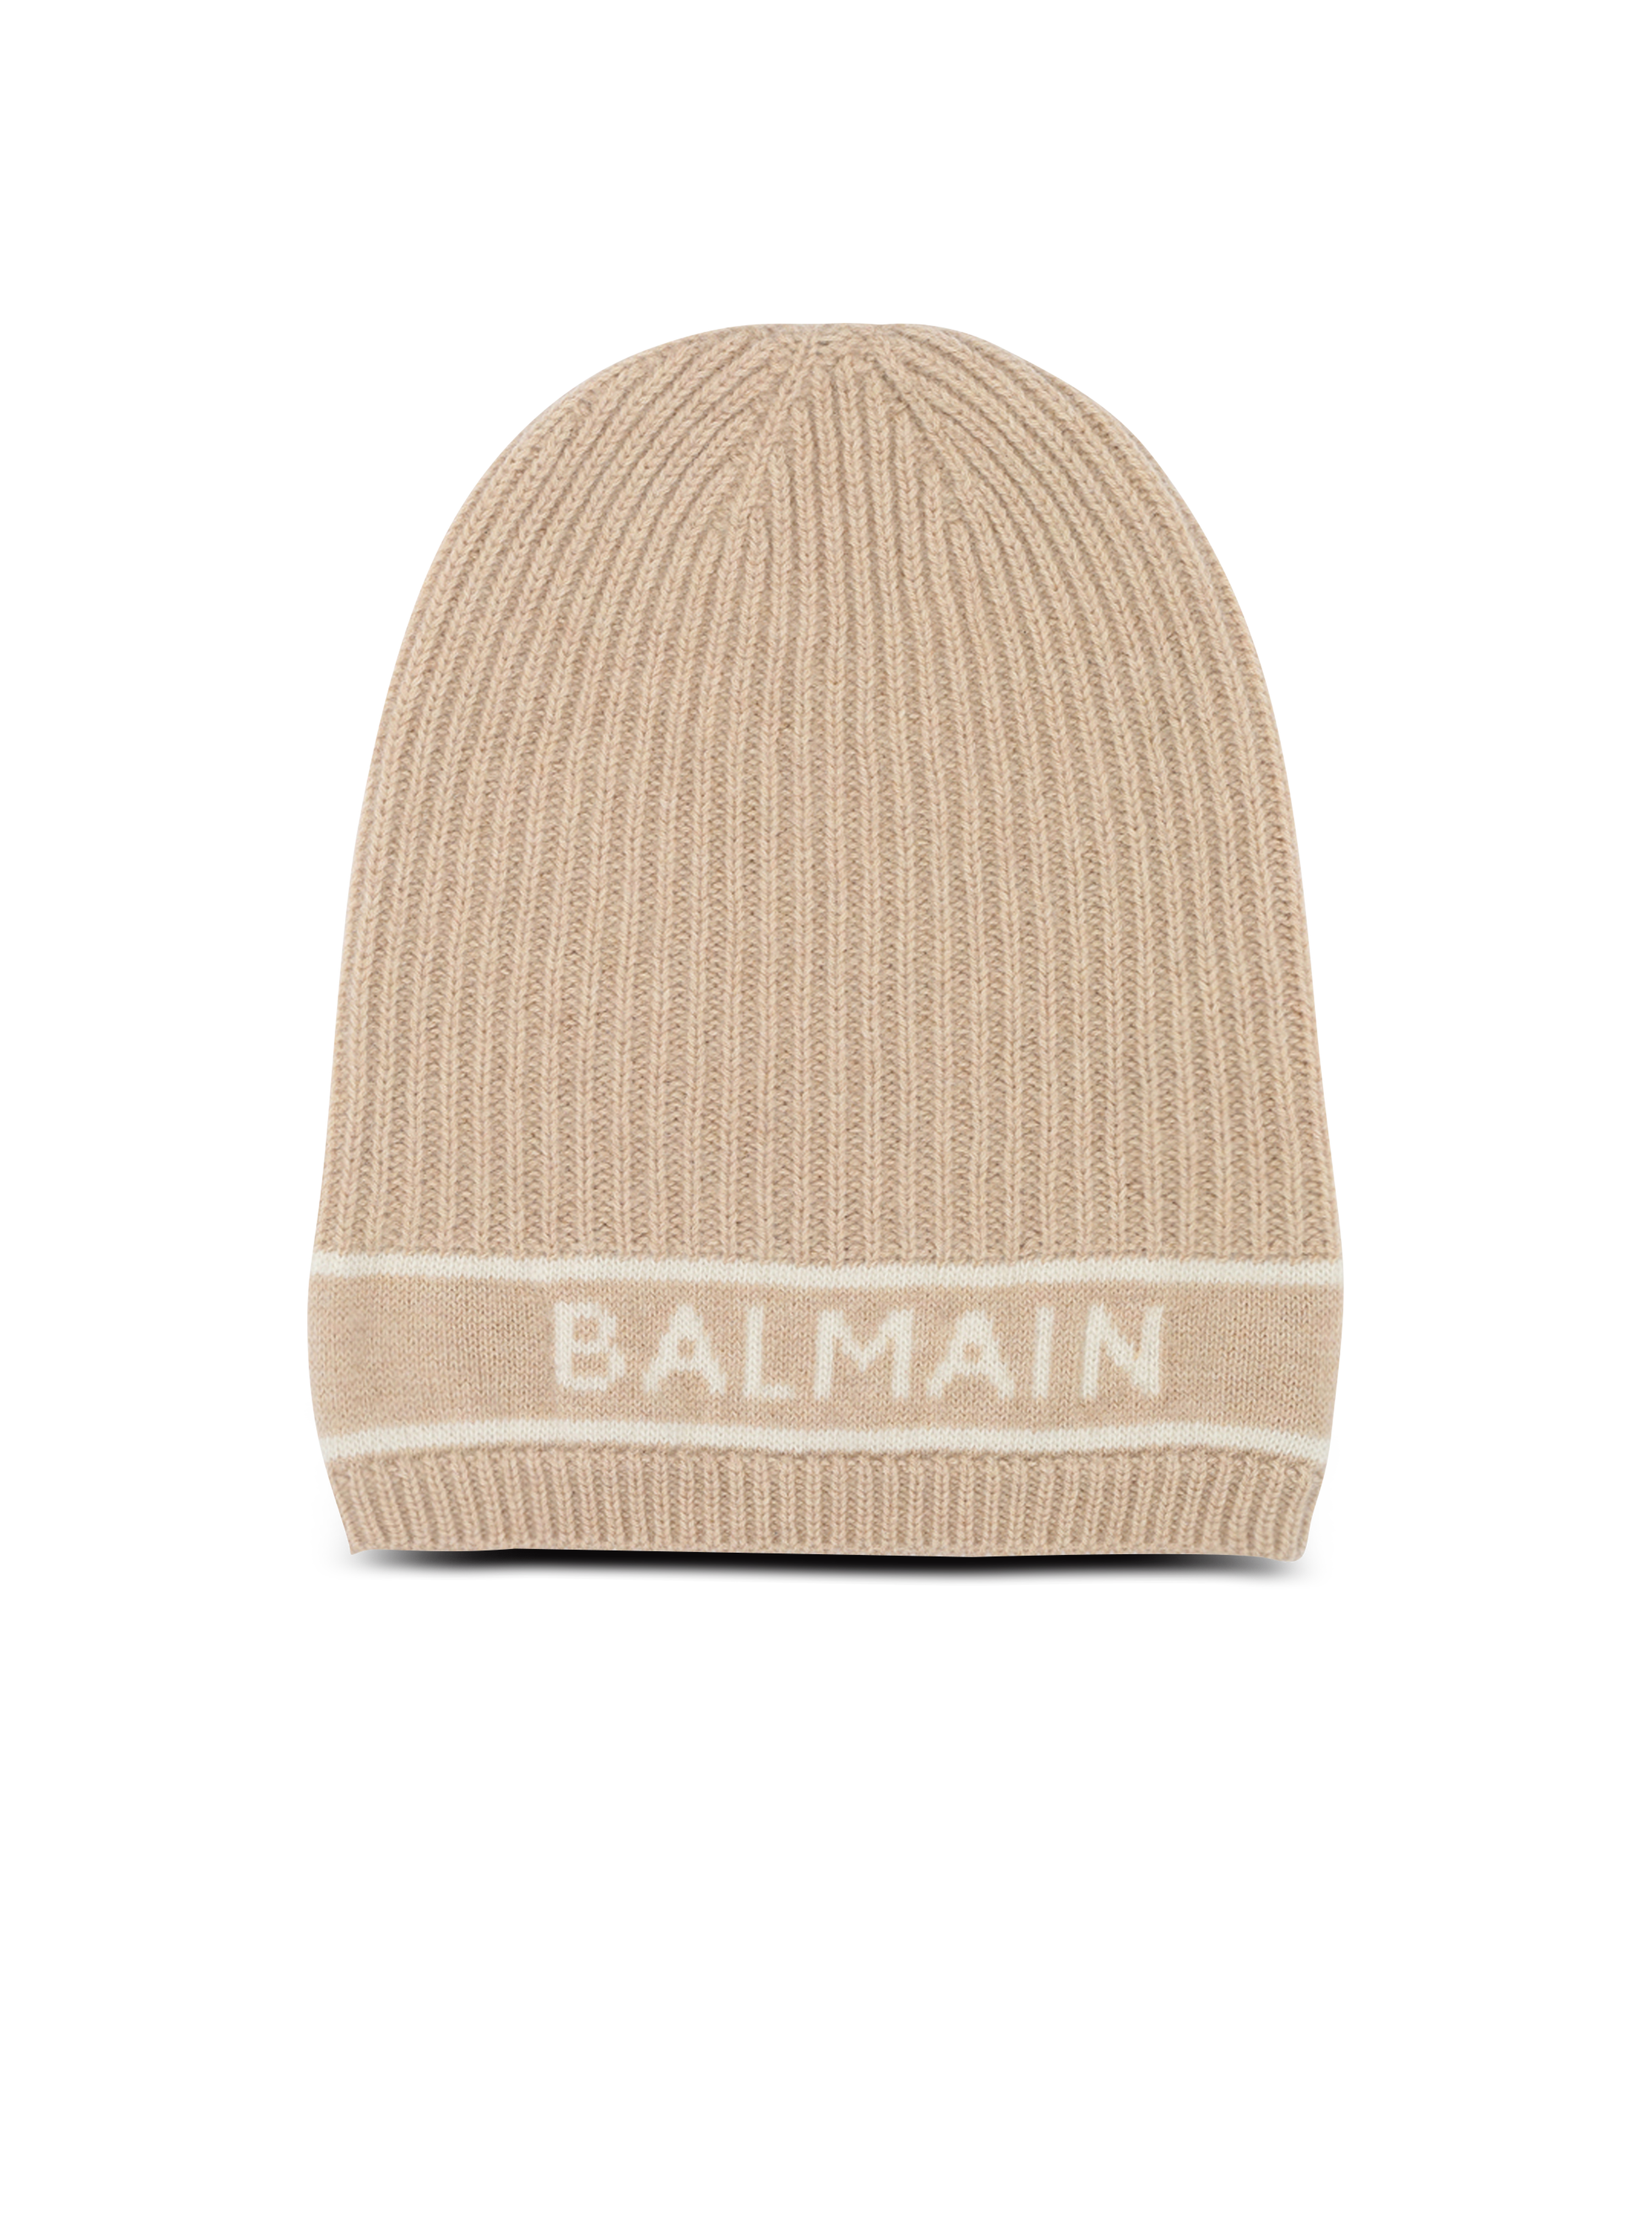 Wool beanie with Balmain logo, beige